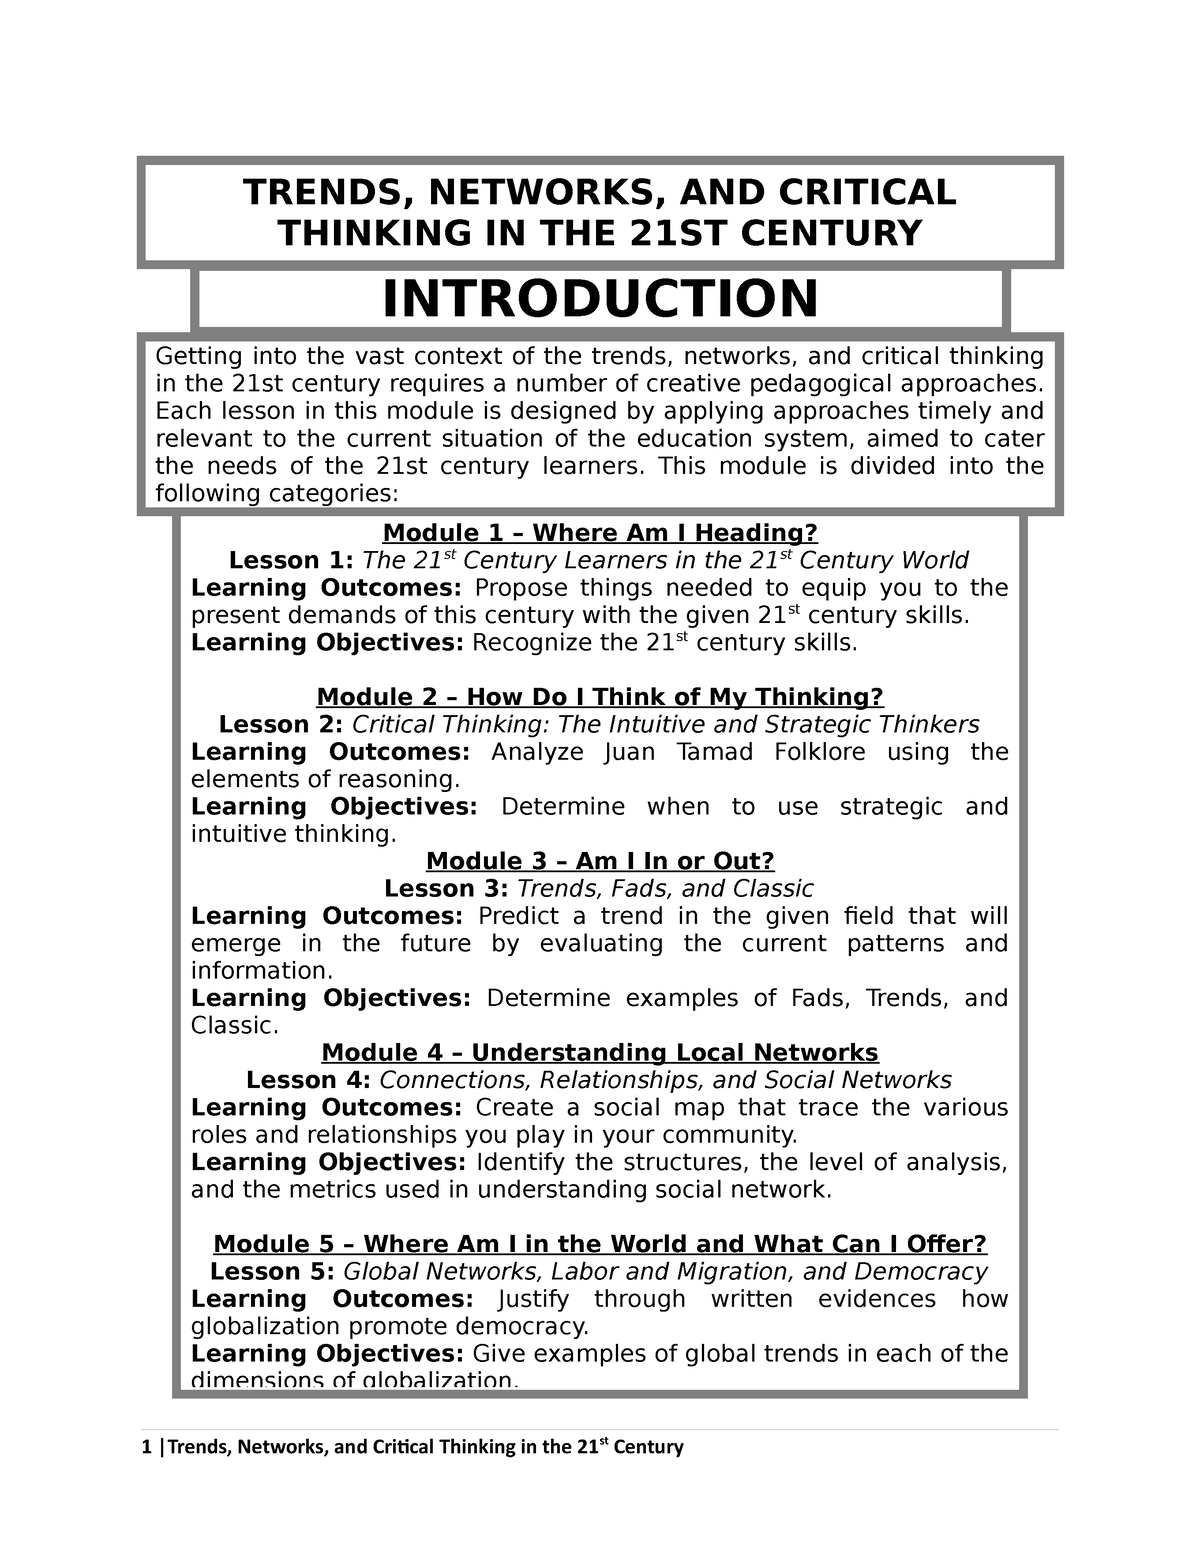 critical thinking lesson pdf